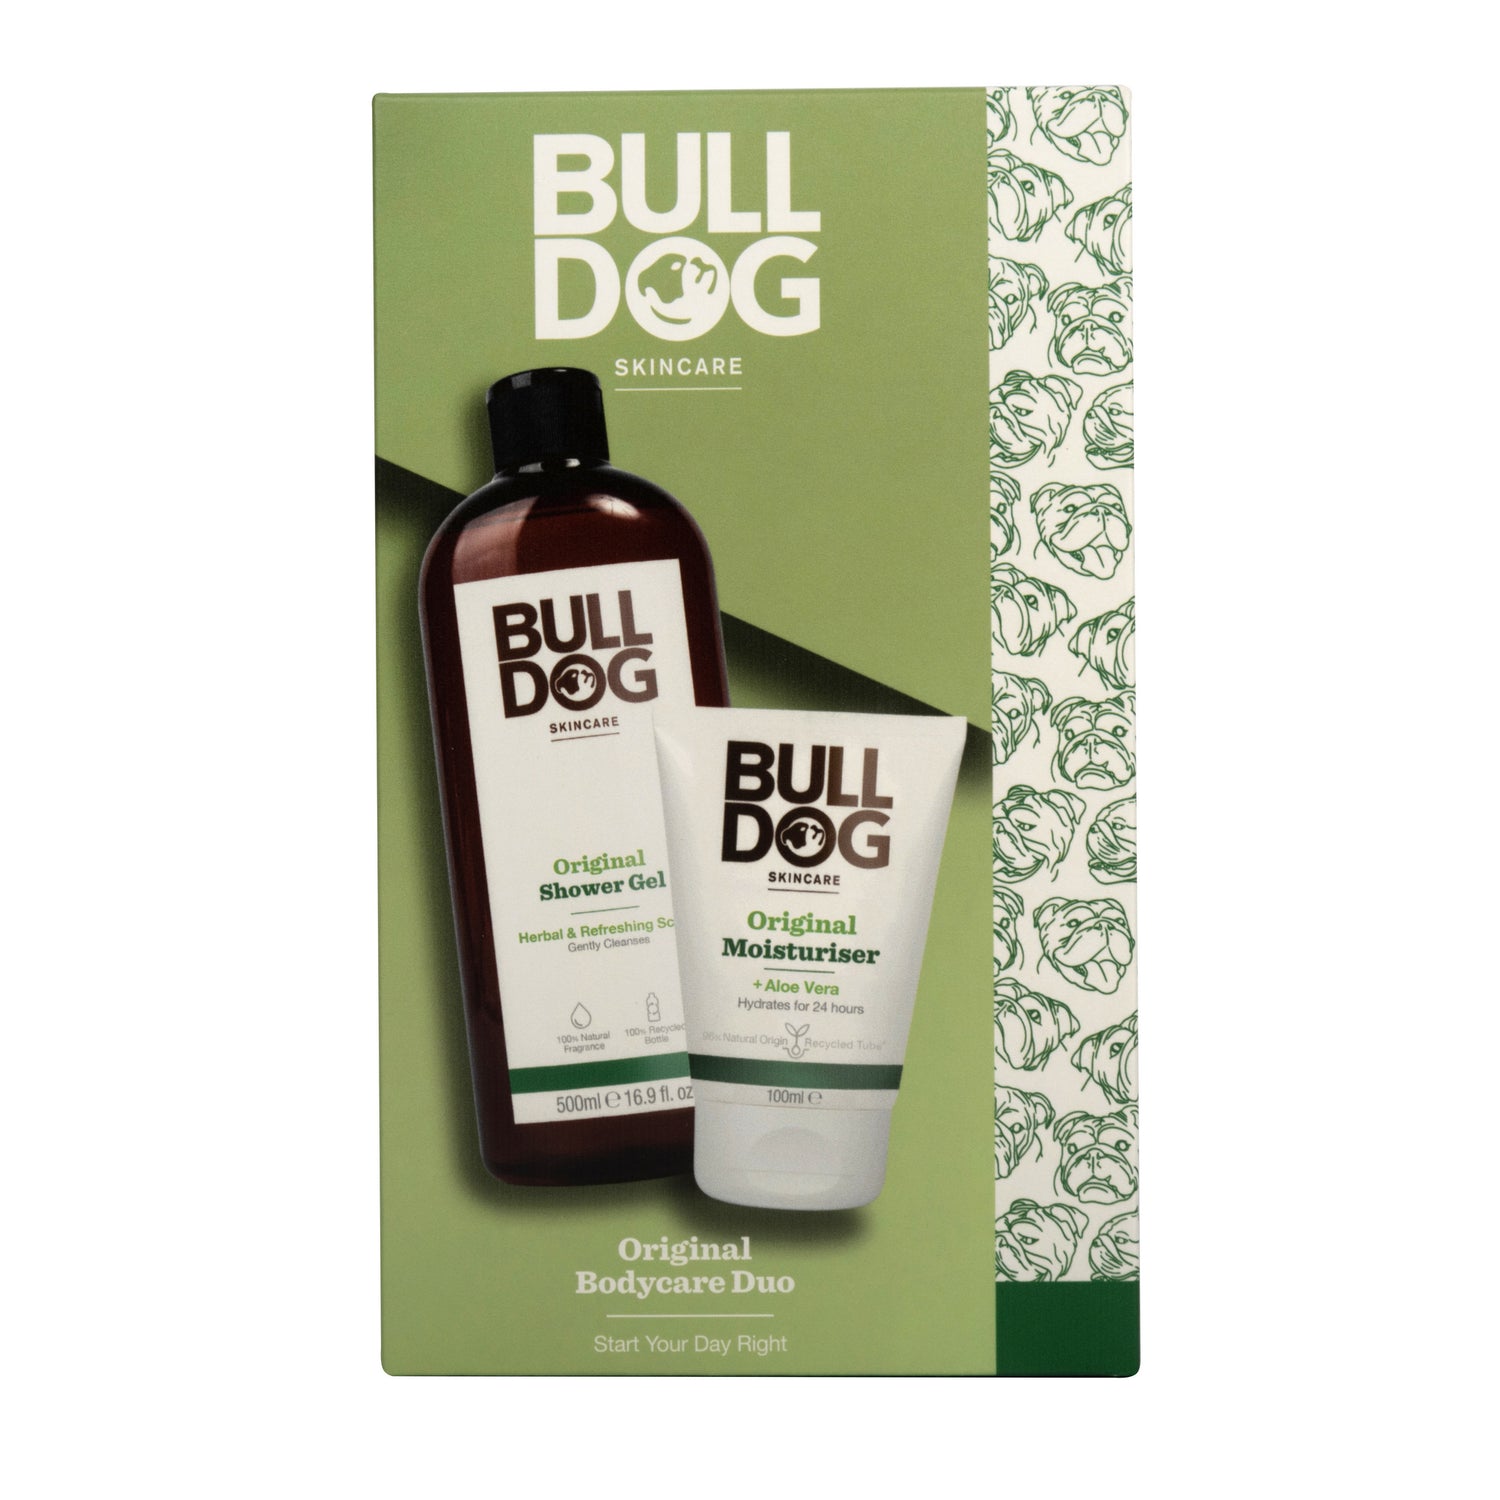 Bulldog Original Body Care Duo Giftset